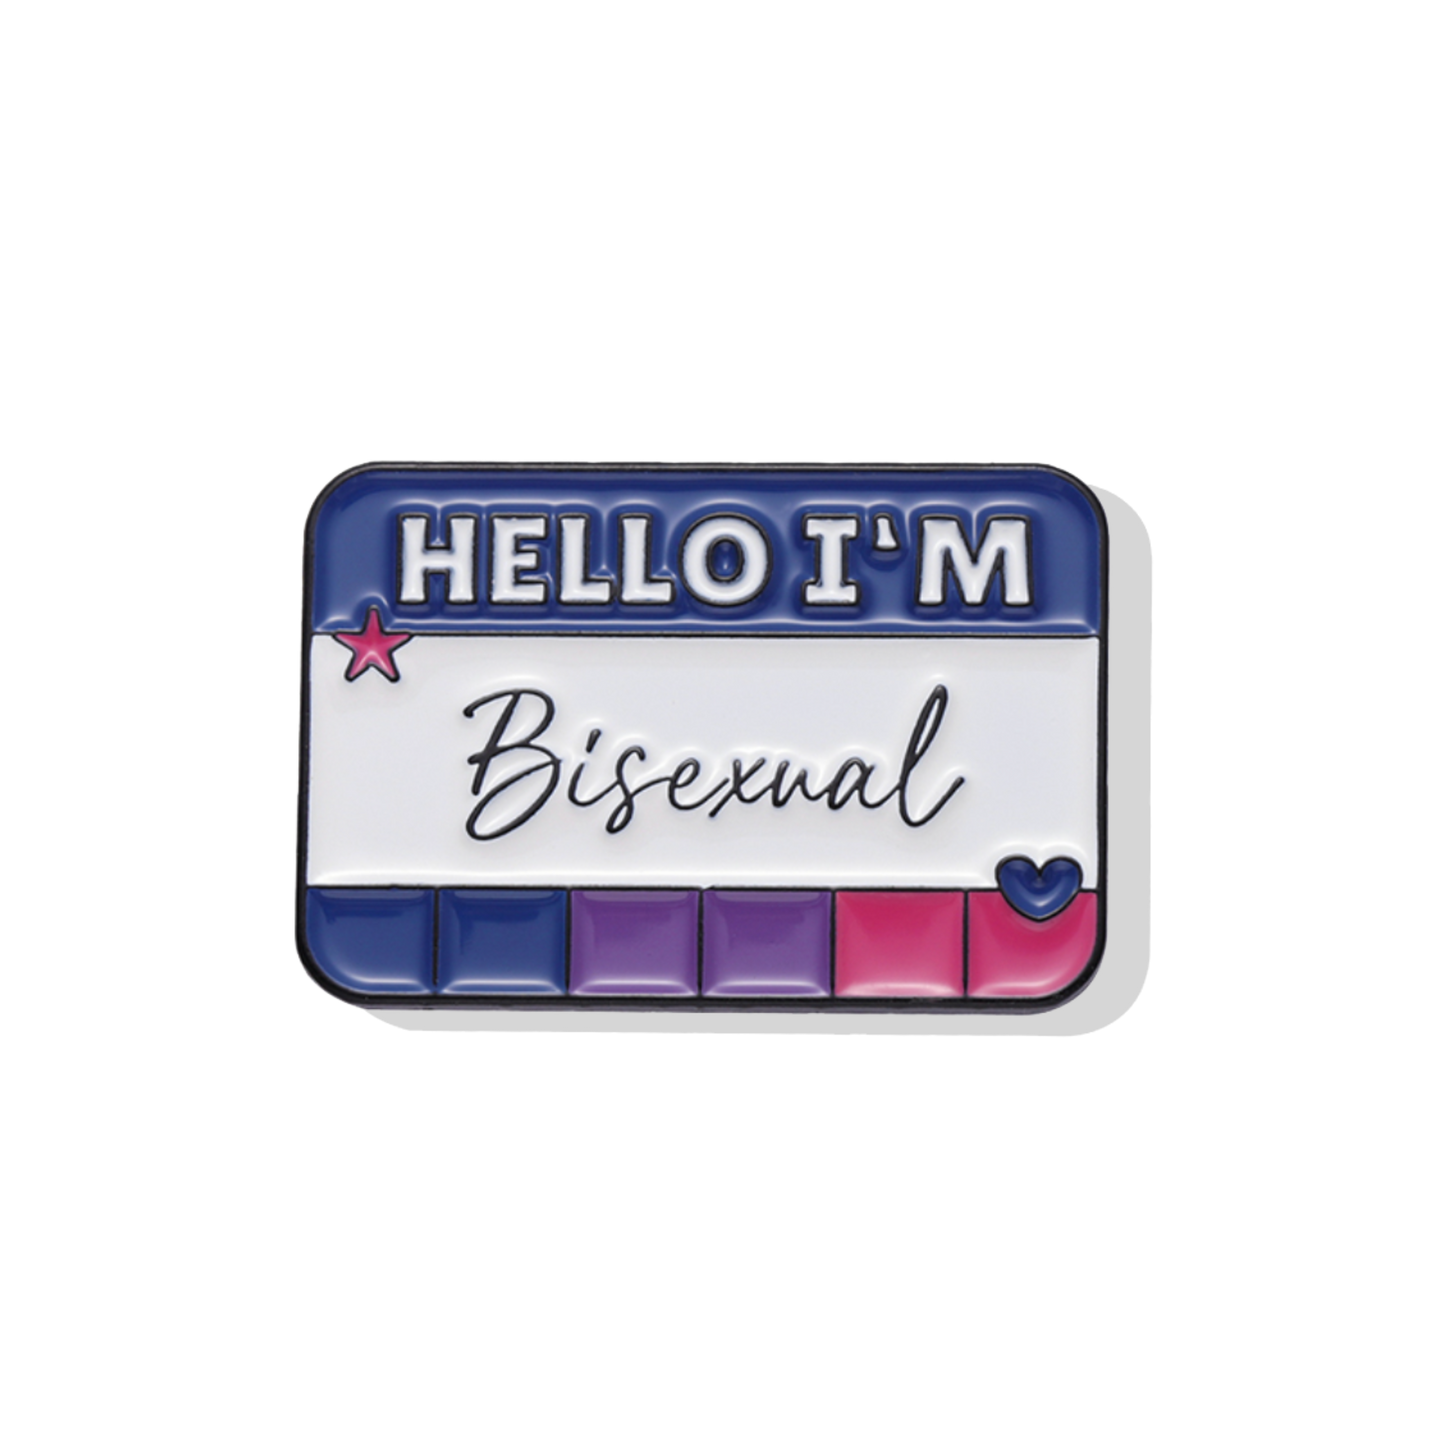 Hello I'm Bisexual Enamel Pin